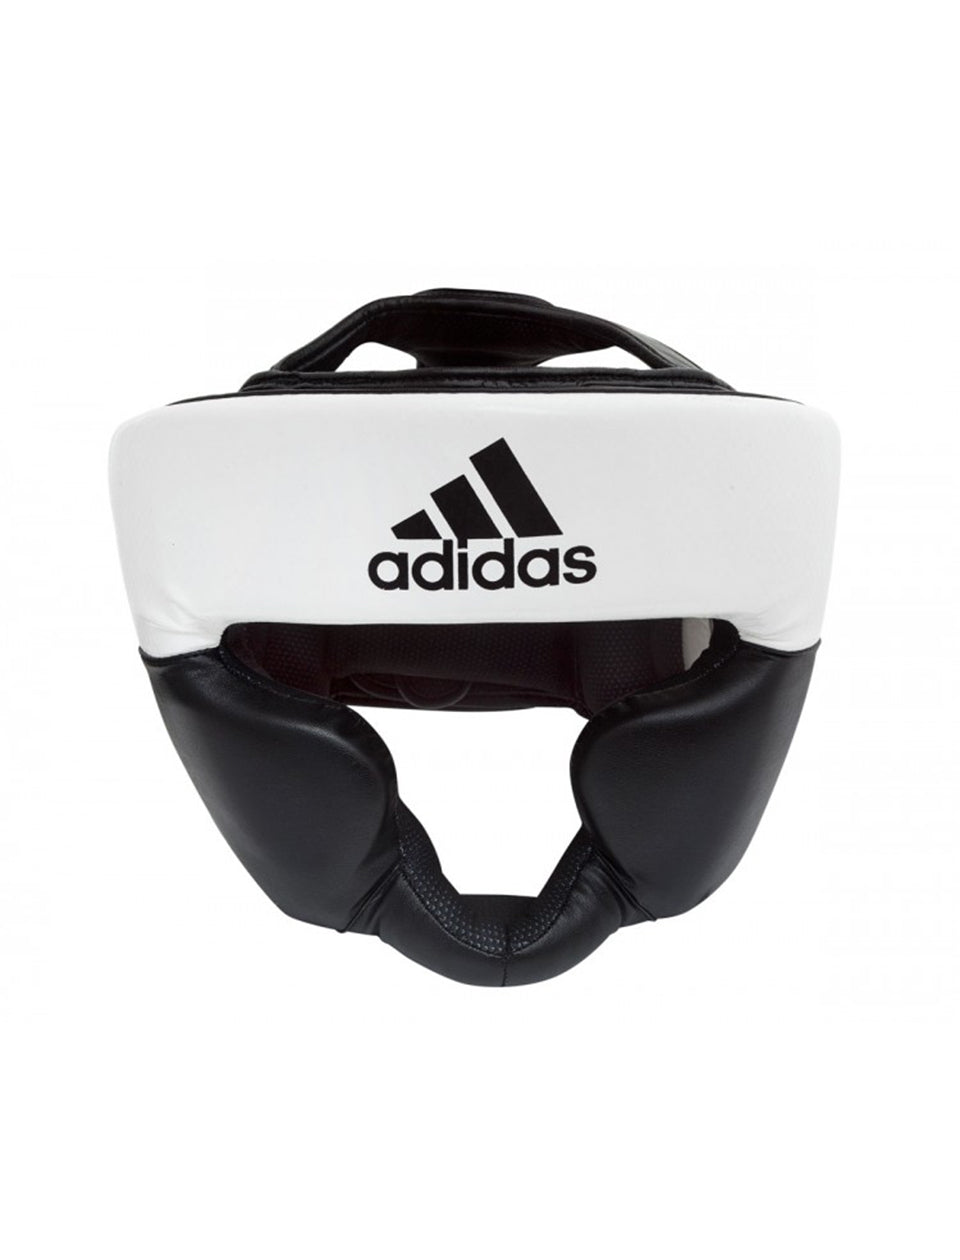 Adidas Boxing Head Gear Response Black L - ADIBHG024